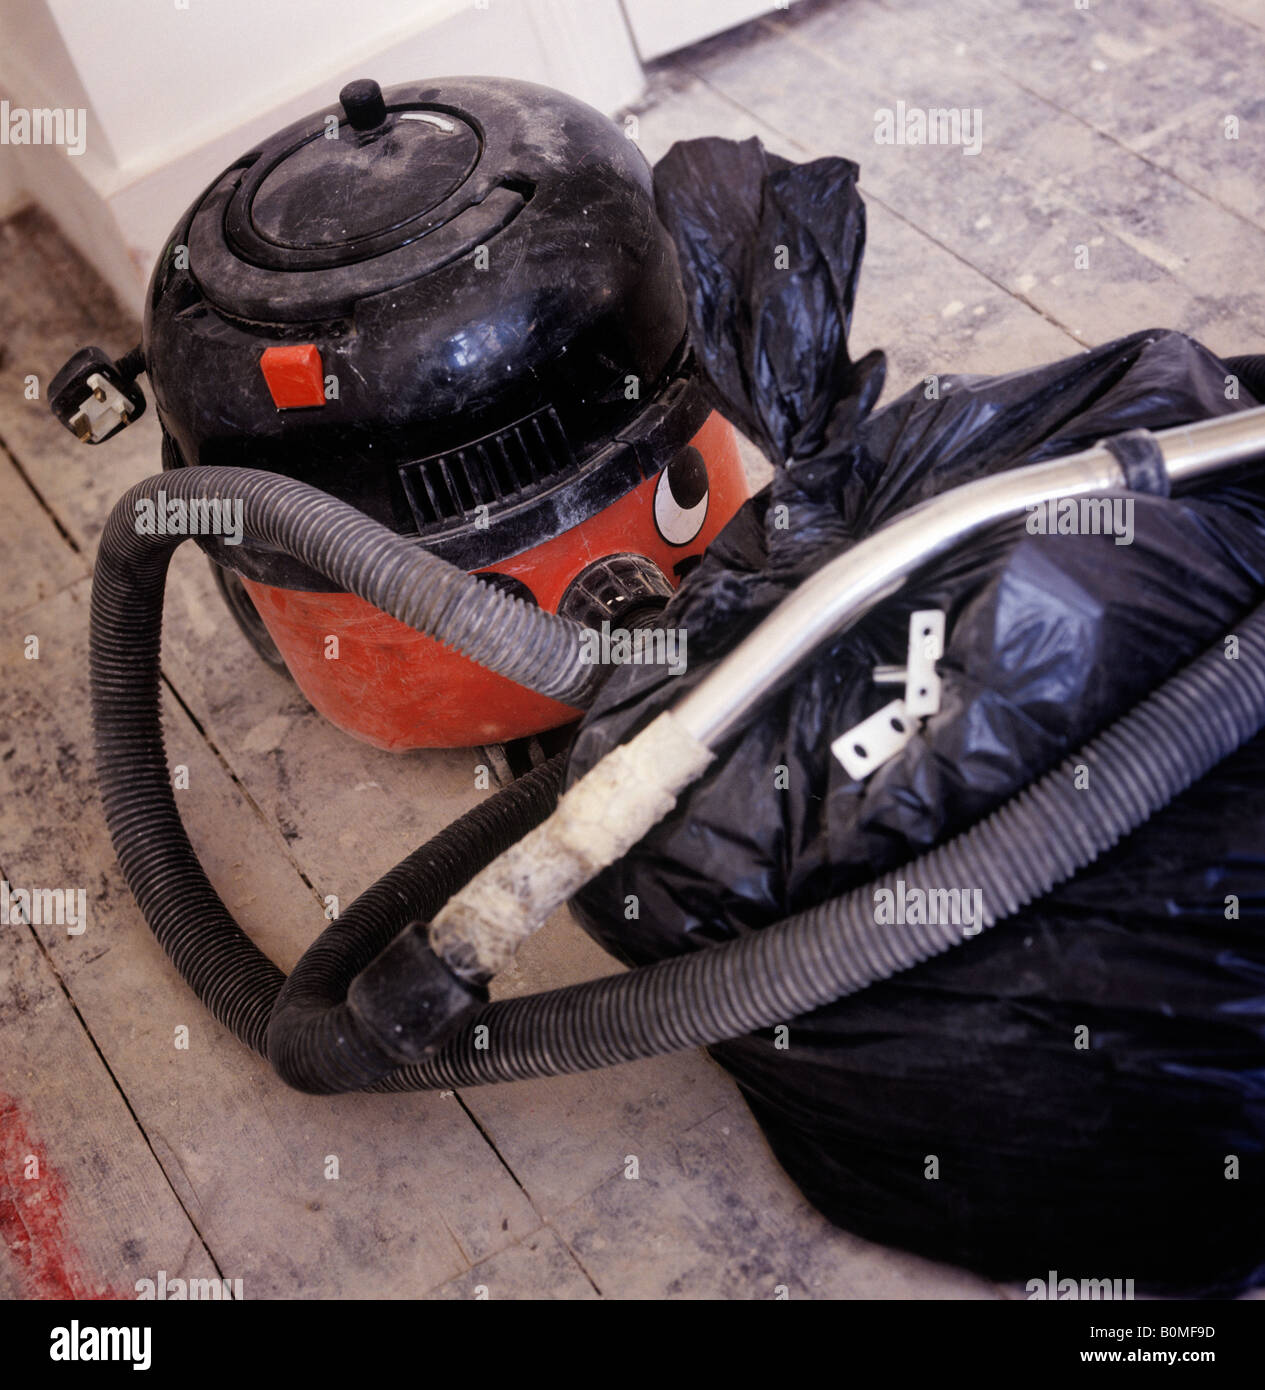 a builders henry hoover vacuum cleaner and black bin bag Stock Photo